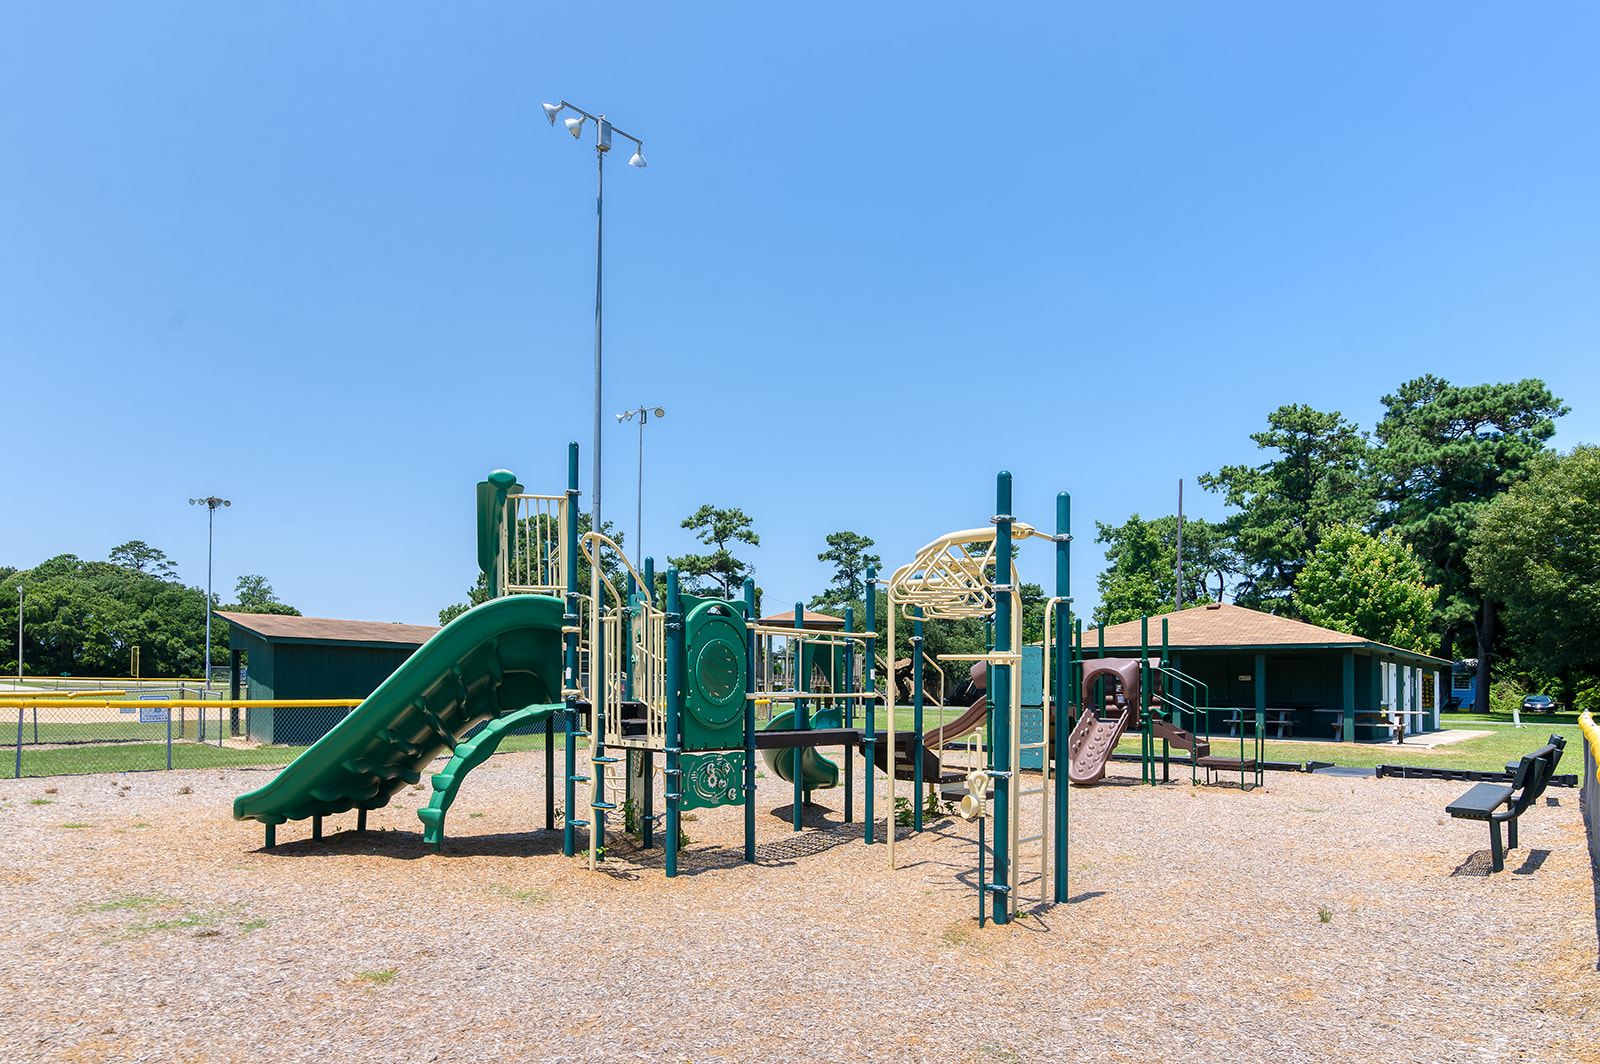 Image of the playground at Wescott Park